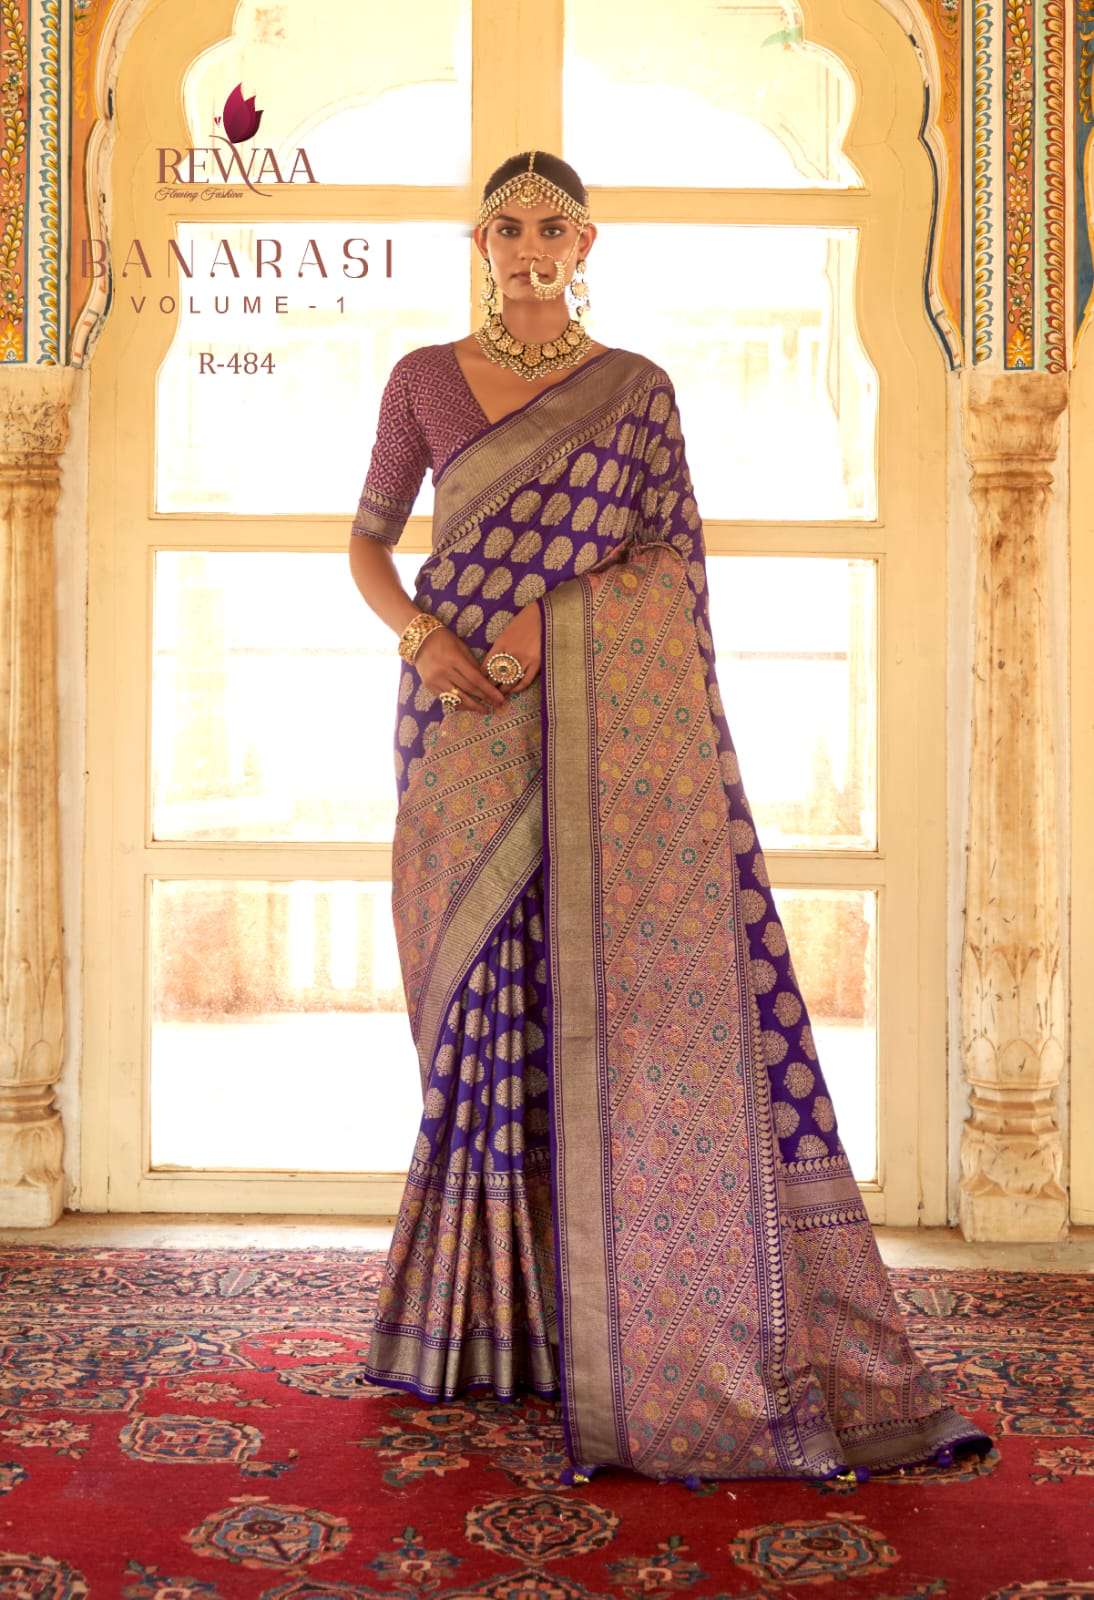 Rewaa fashion banarasi vol 1 silk with Patola design wedding...